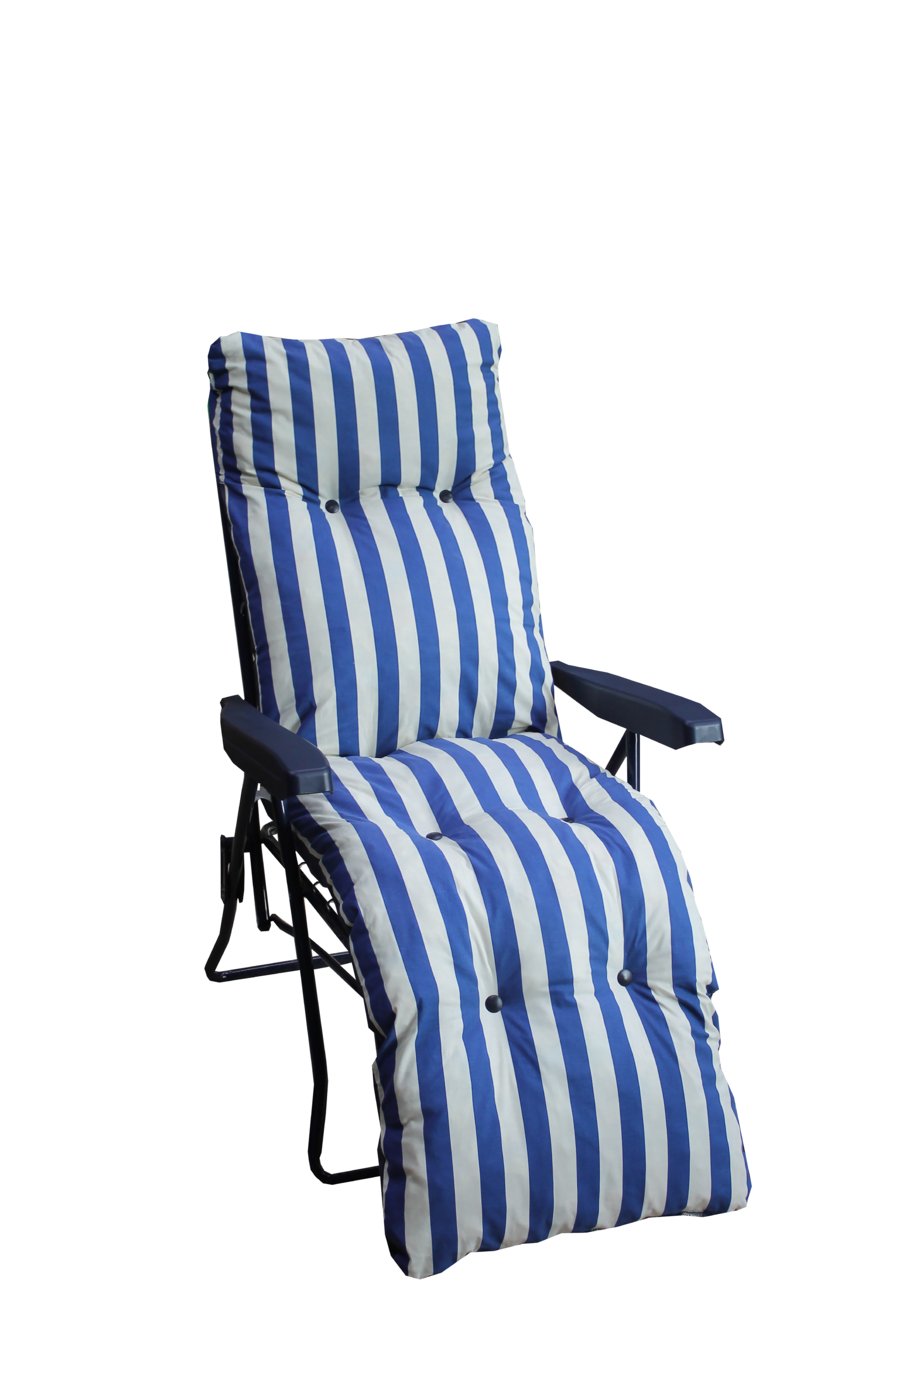 Buy Argos Home Metal Sun Lounger Chair 